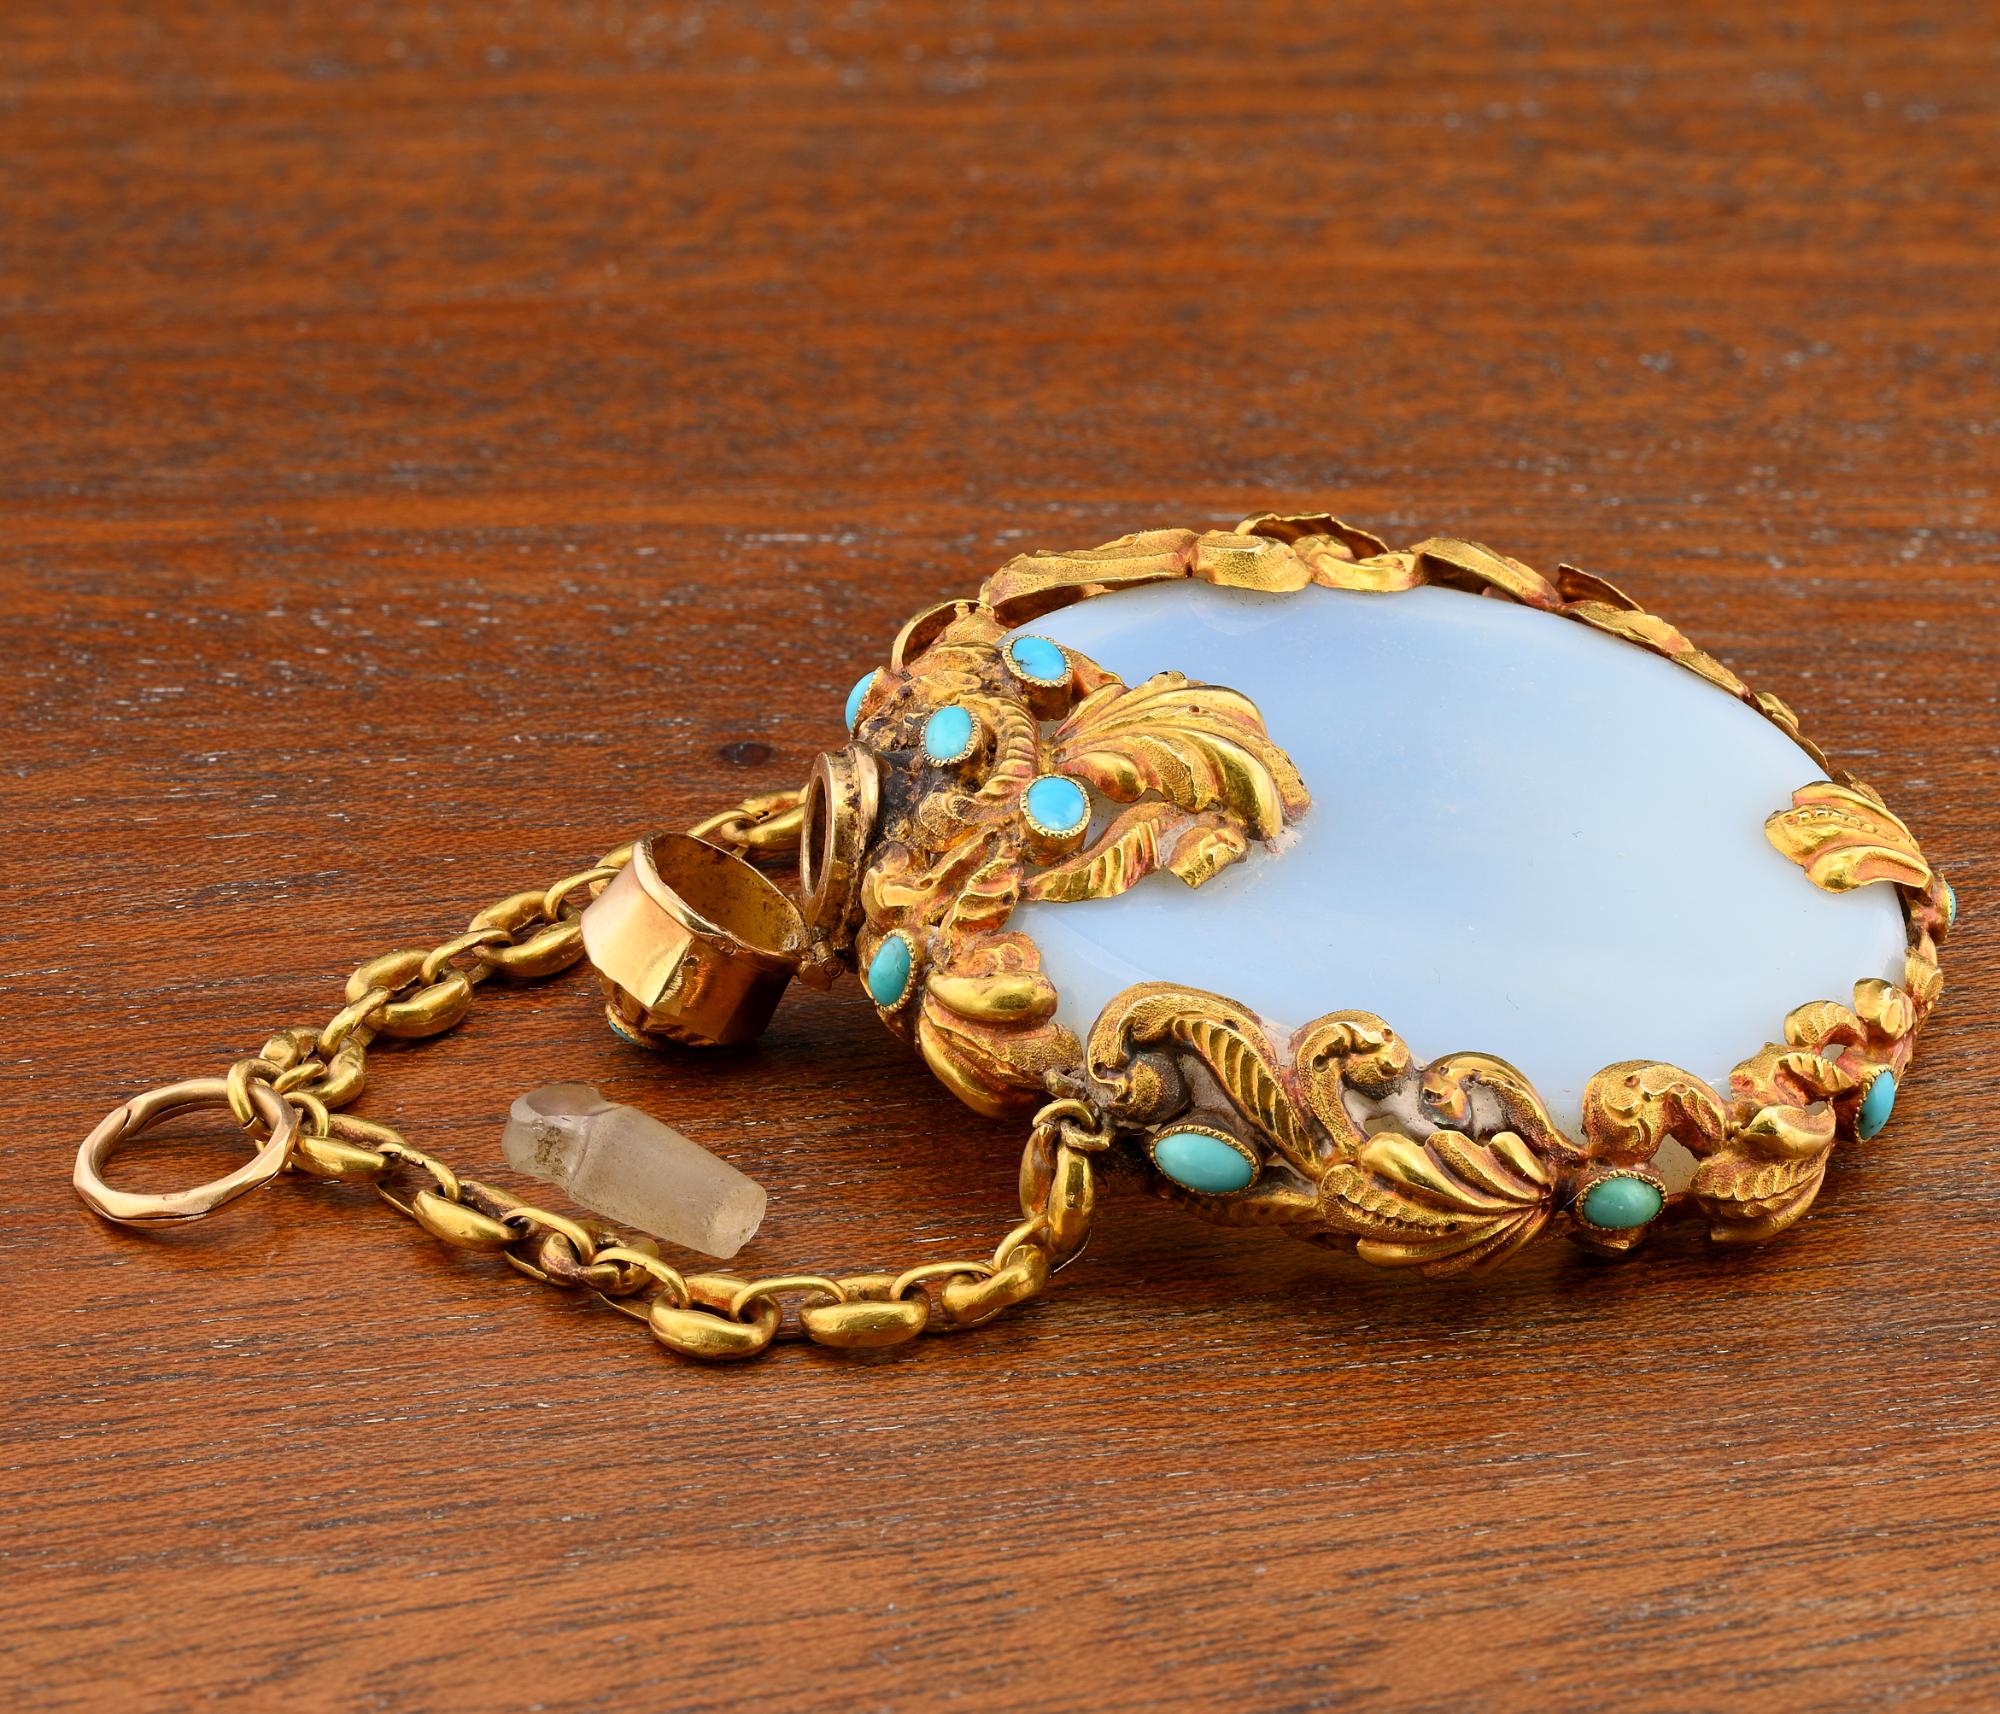 Regency Scent Bottle Azure Opaline Turquoise 15 Ct Gold Pendant For Sale 4